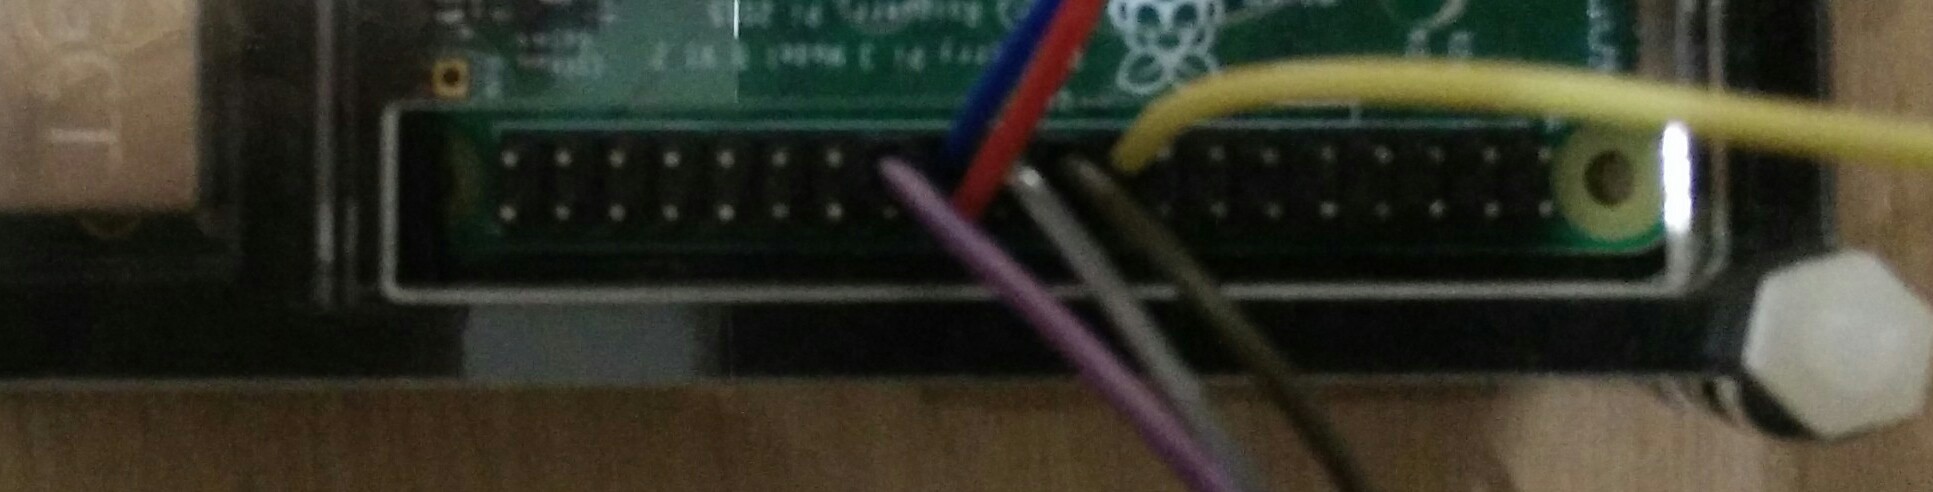 Raspberry wiring